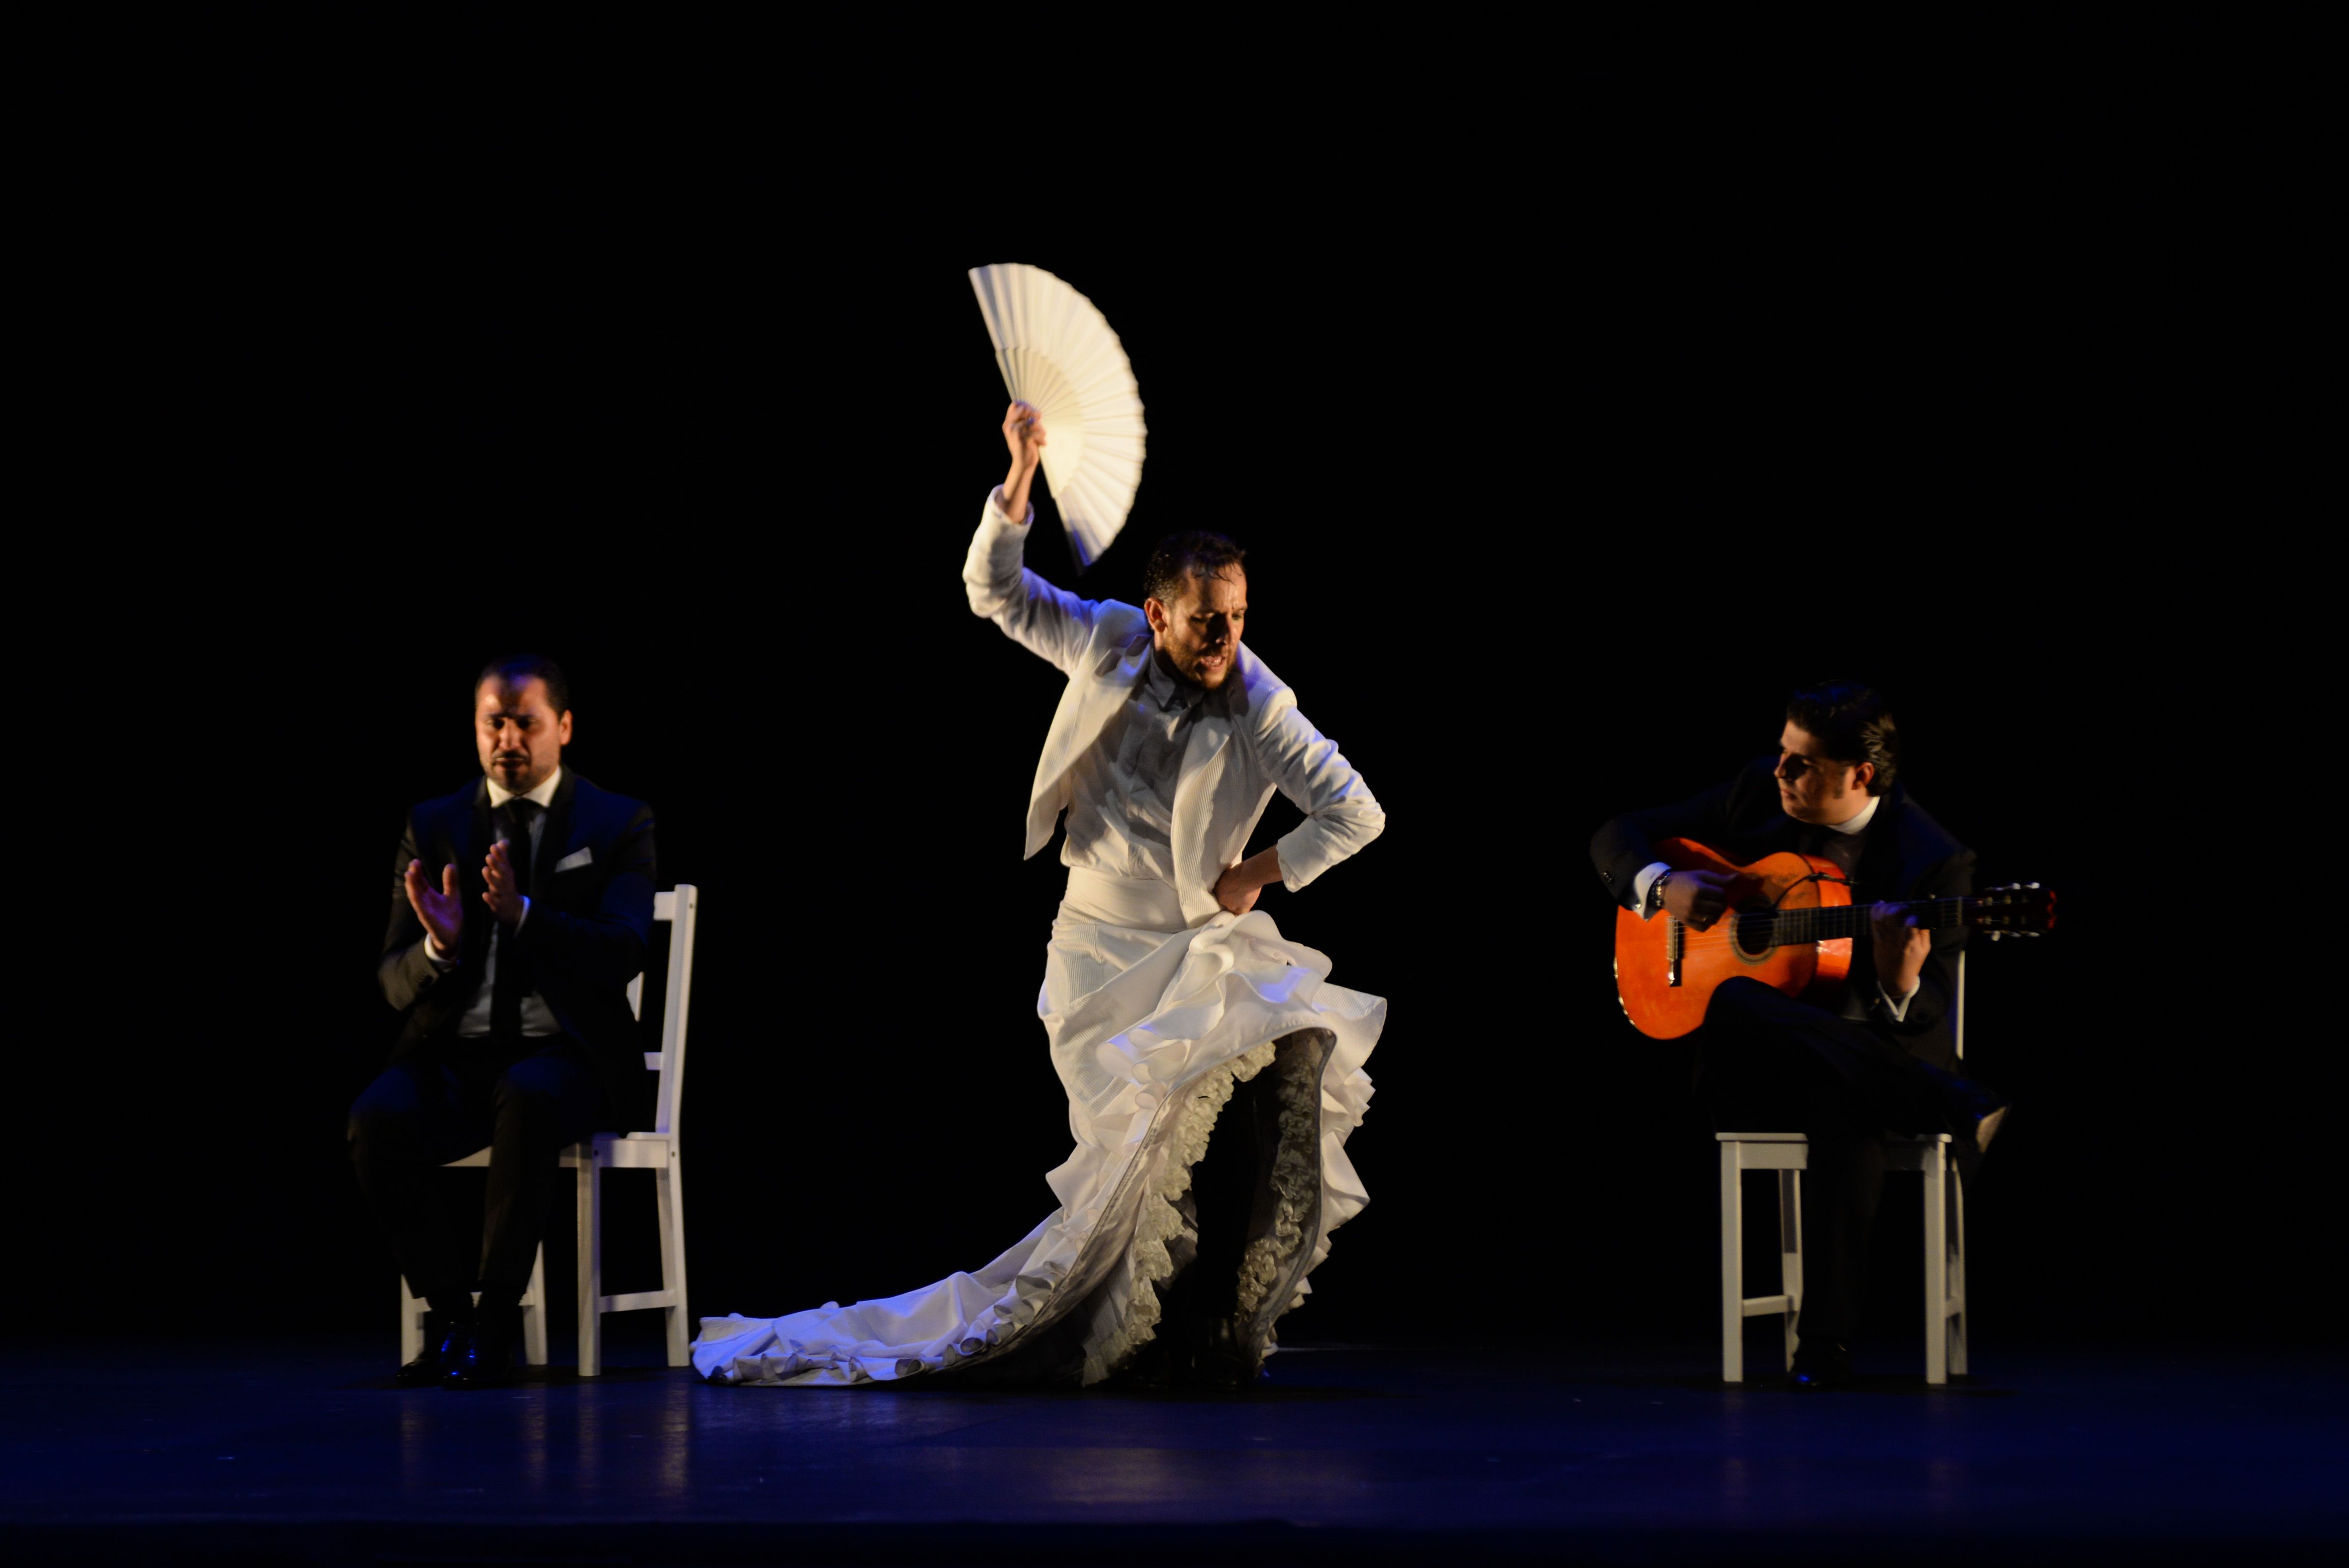 festival_flamenco_24_feb_villamarta_gonzalez_byass-23